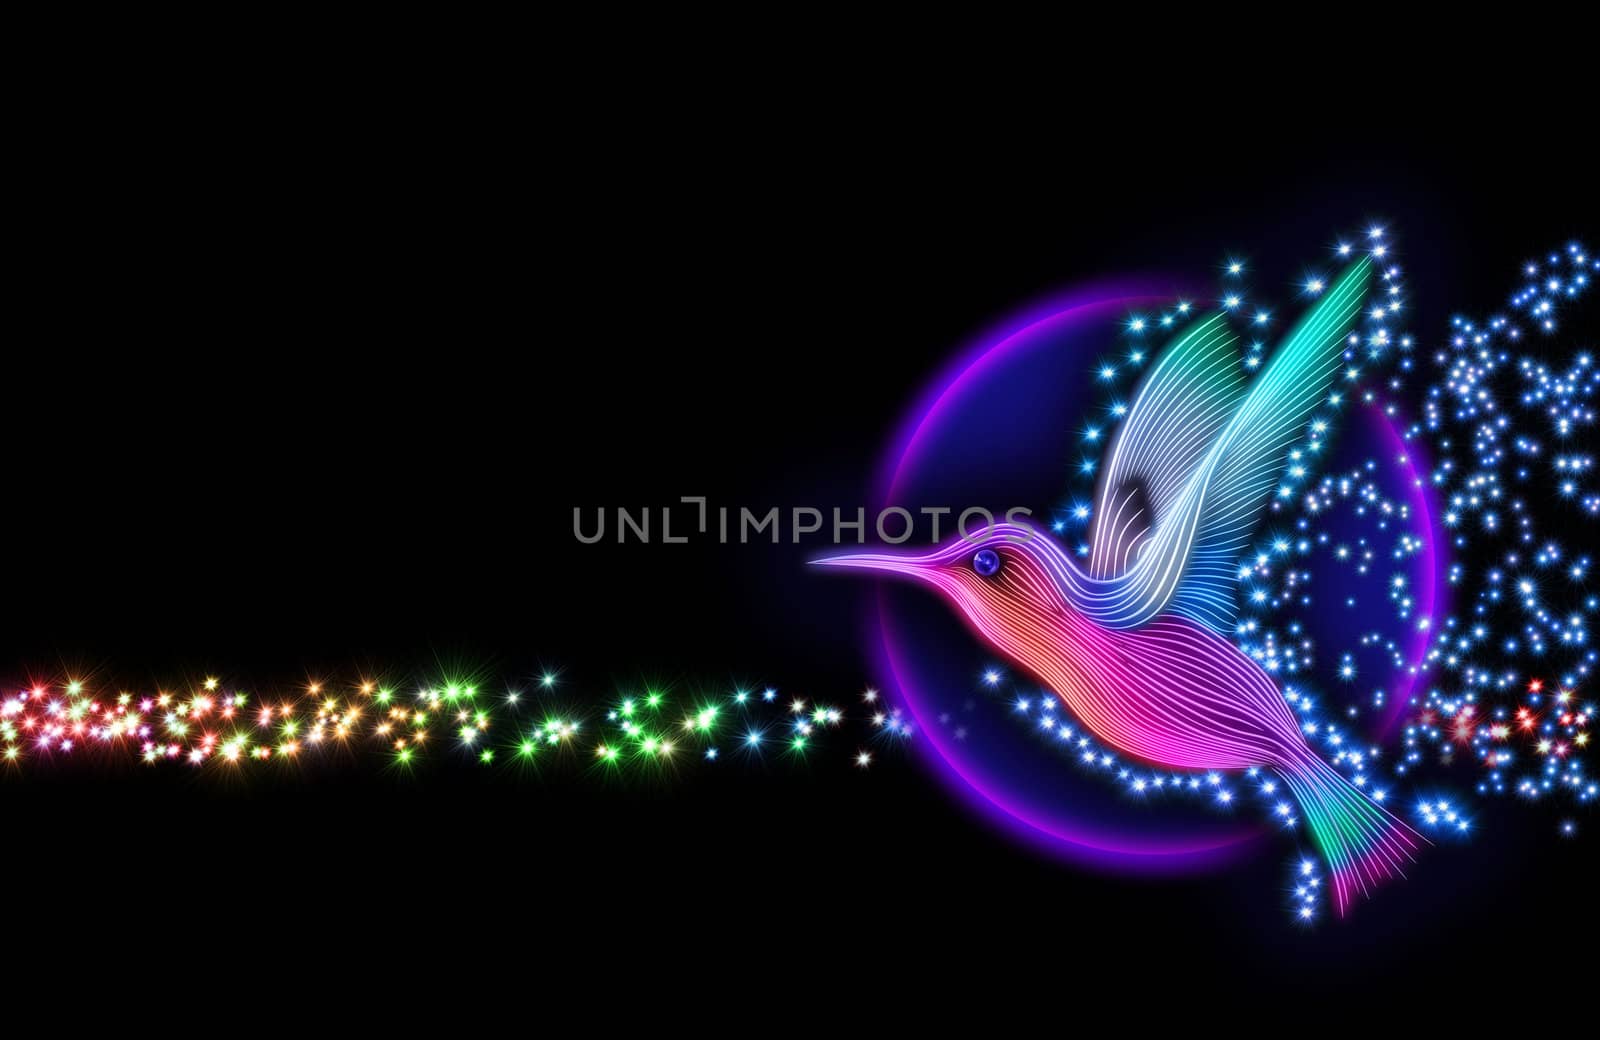 3d render of colibri bird - hummingbird with stars by merzavka